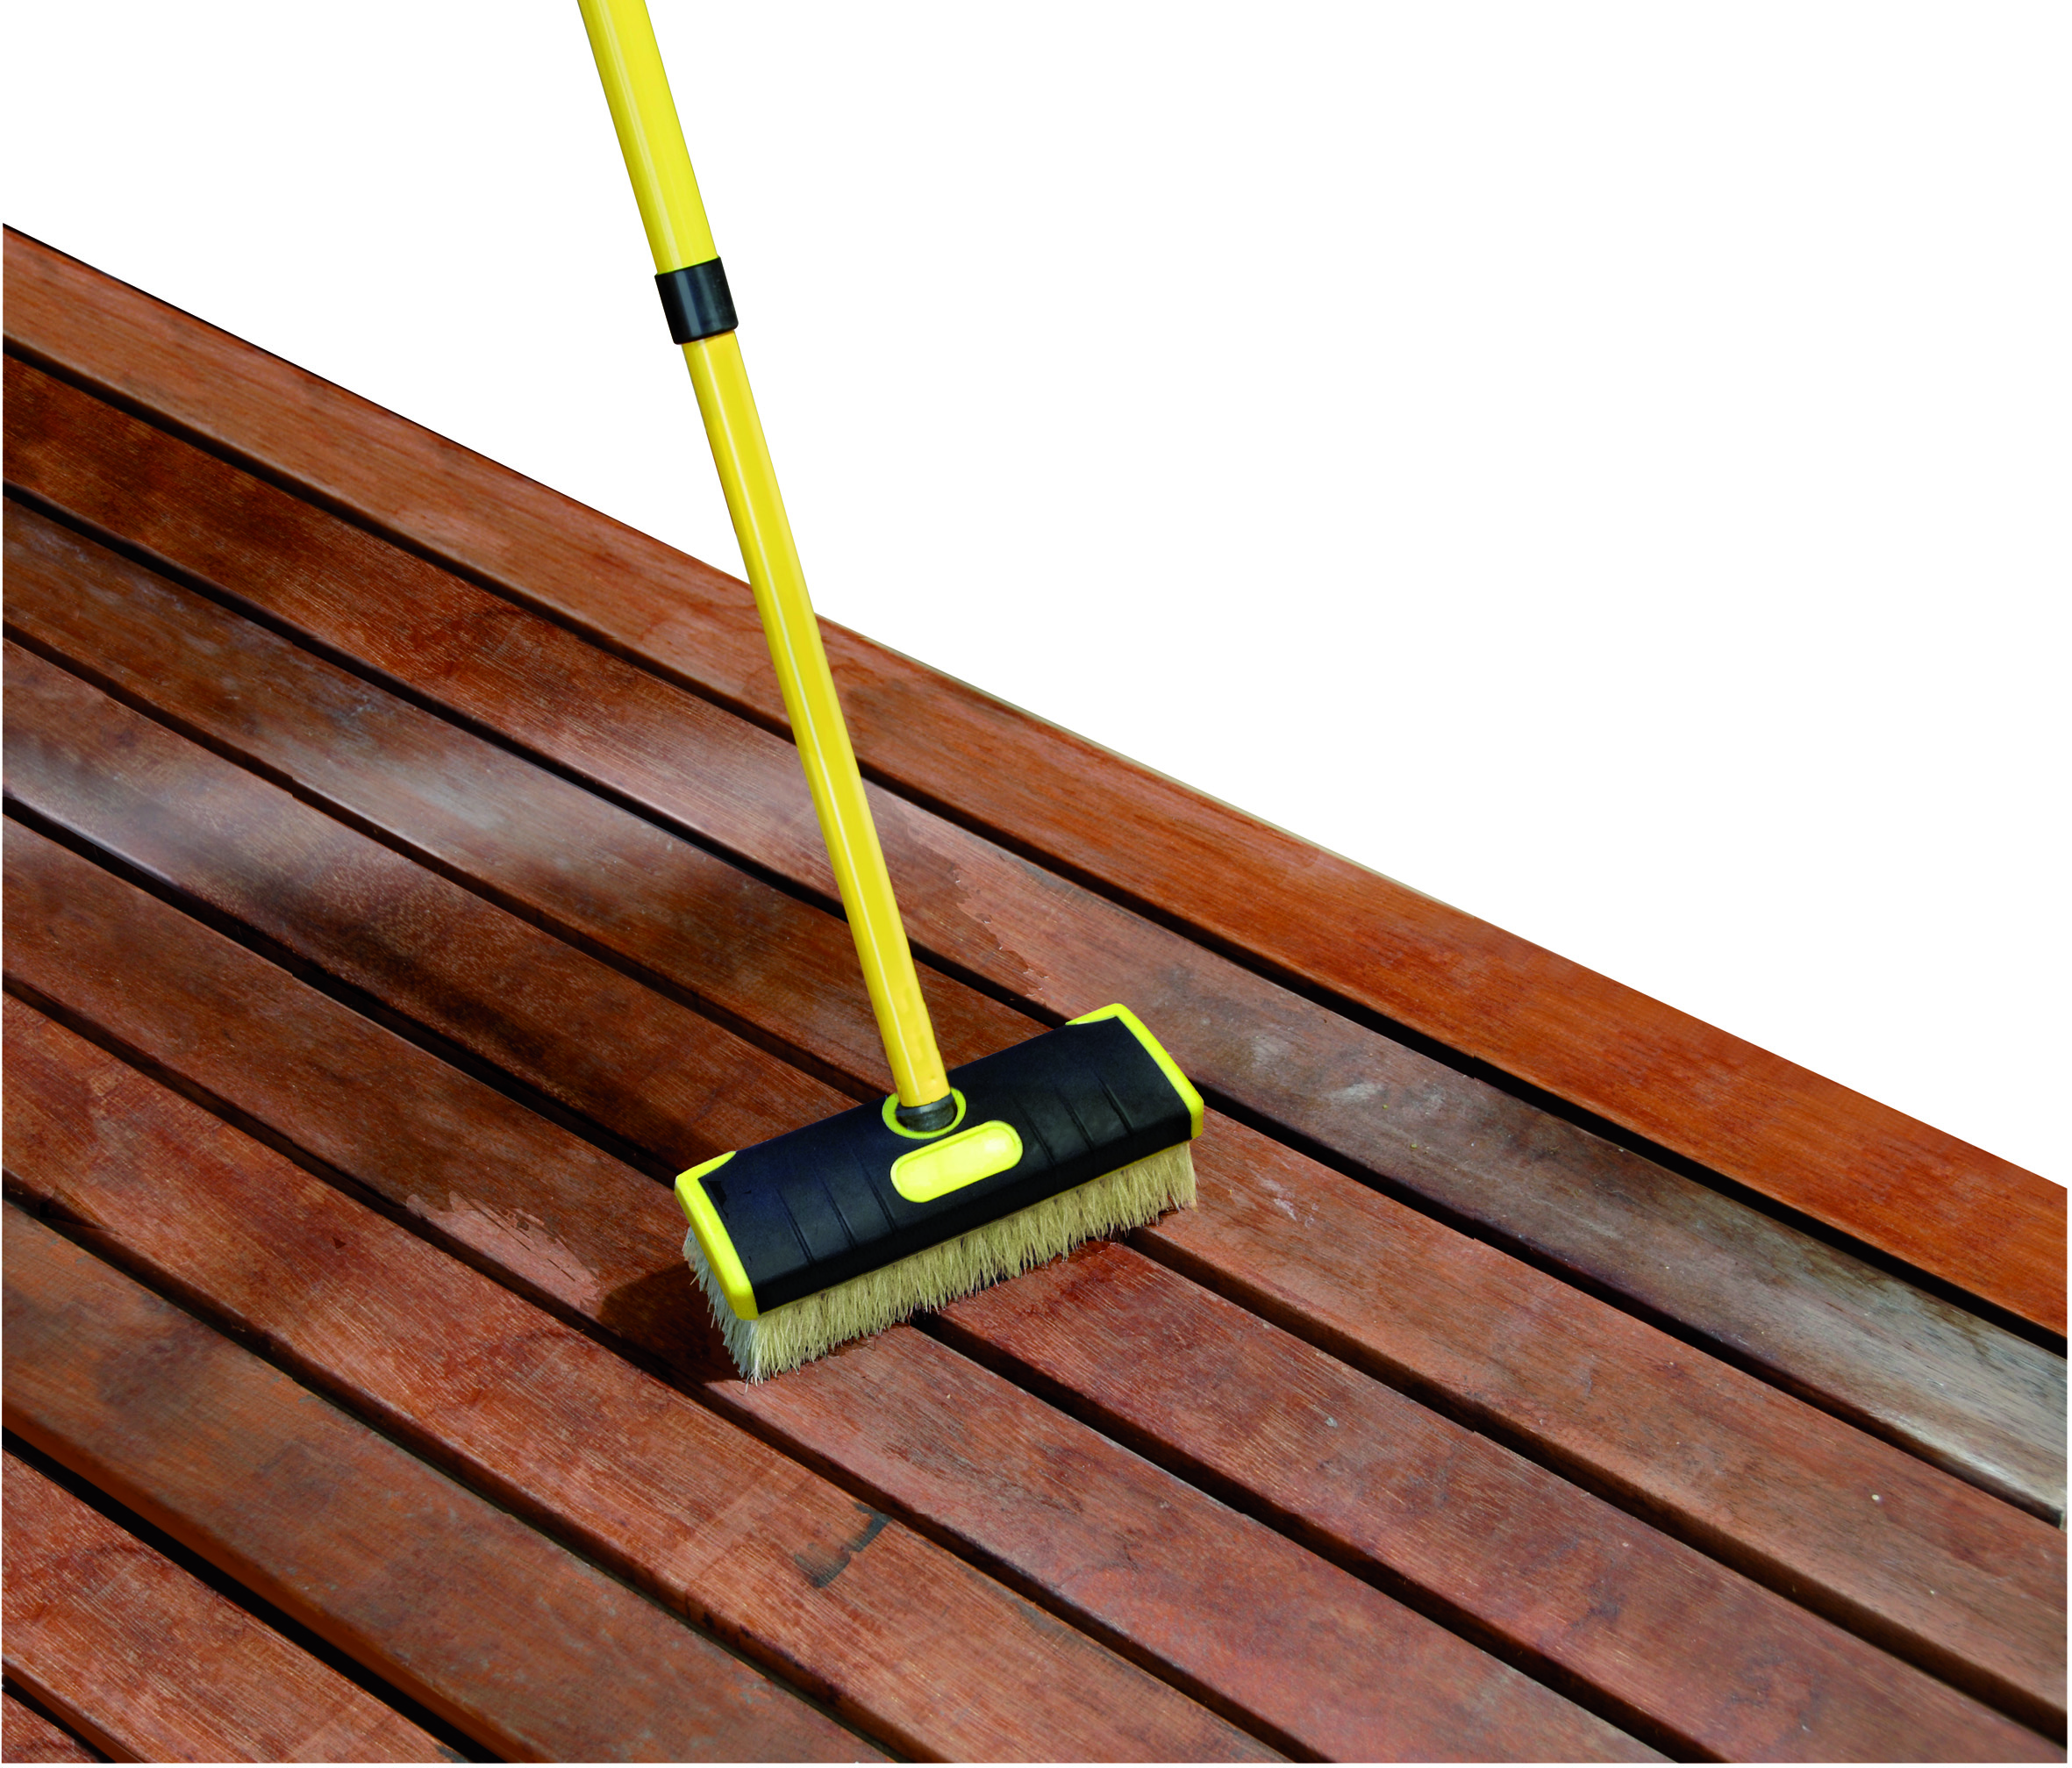 UNi-PRO Deck and Concrete Scrubber with Adjustable Pole